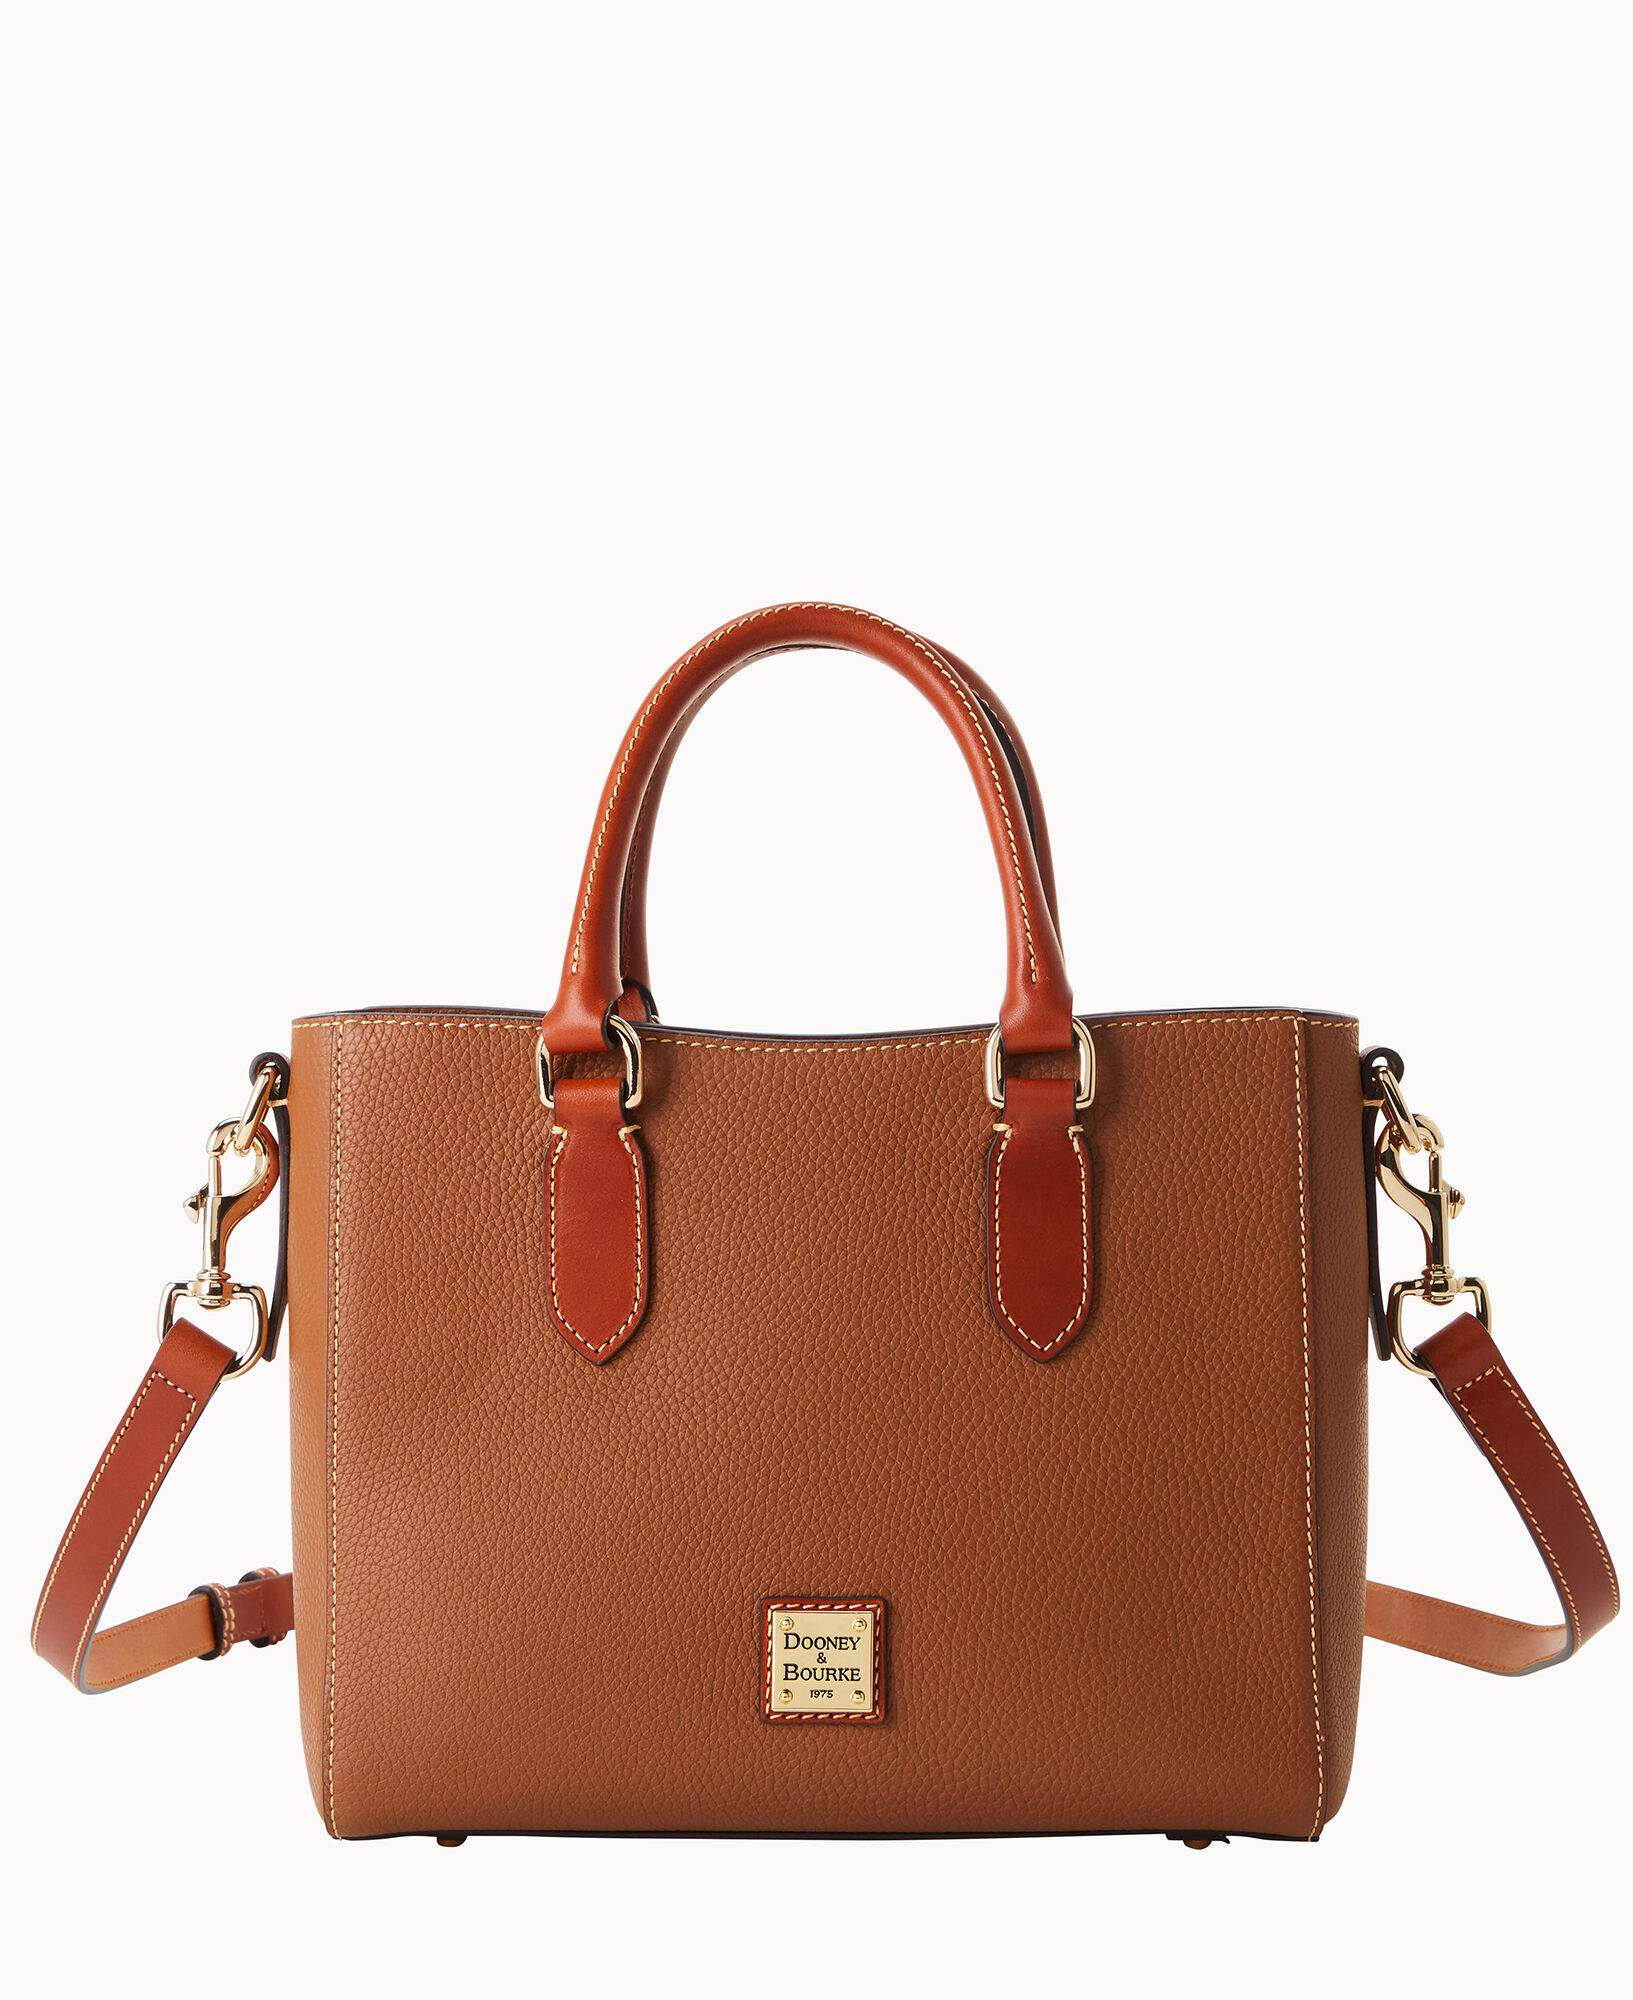 5 TRAVEL BAGS I LOVE (Design Darling)  Bags, Cheap handbags, Women bags  fashion